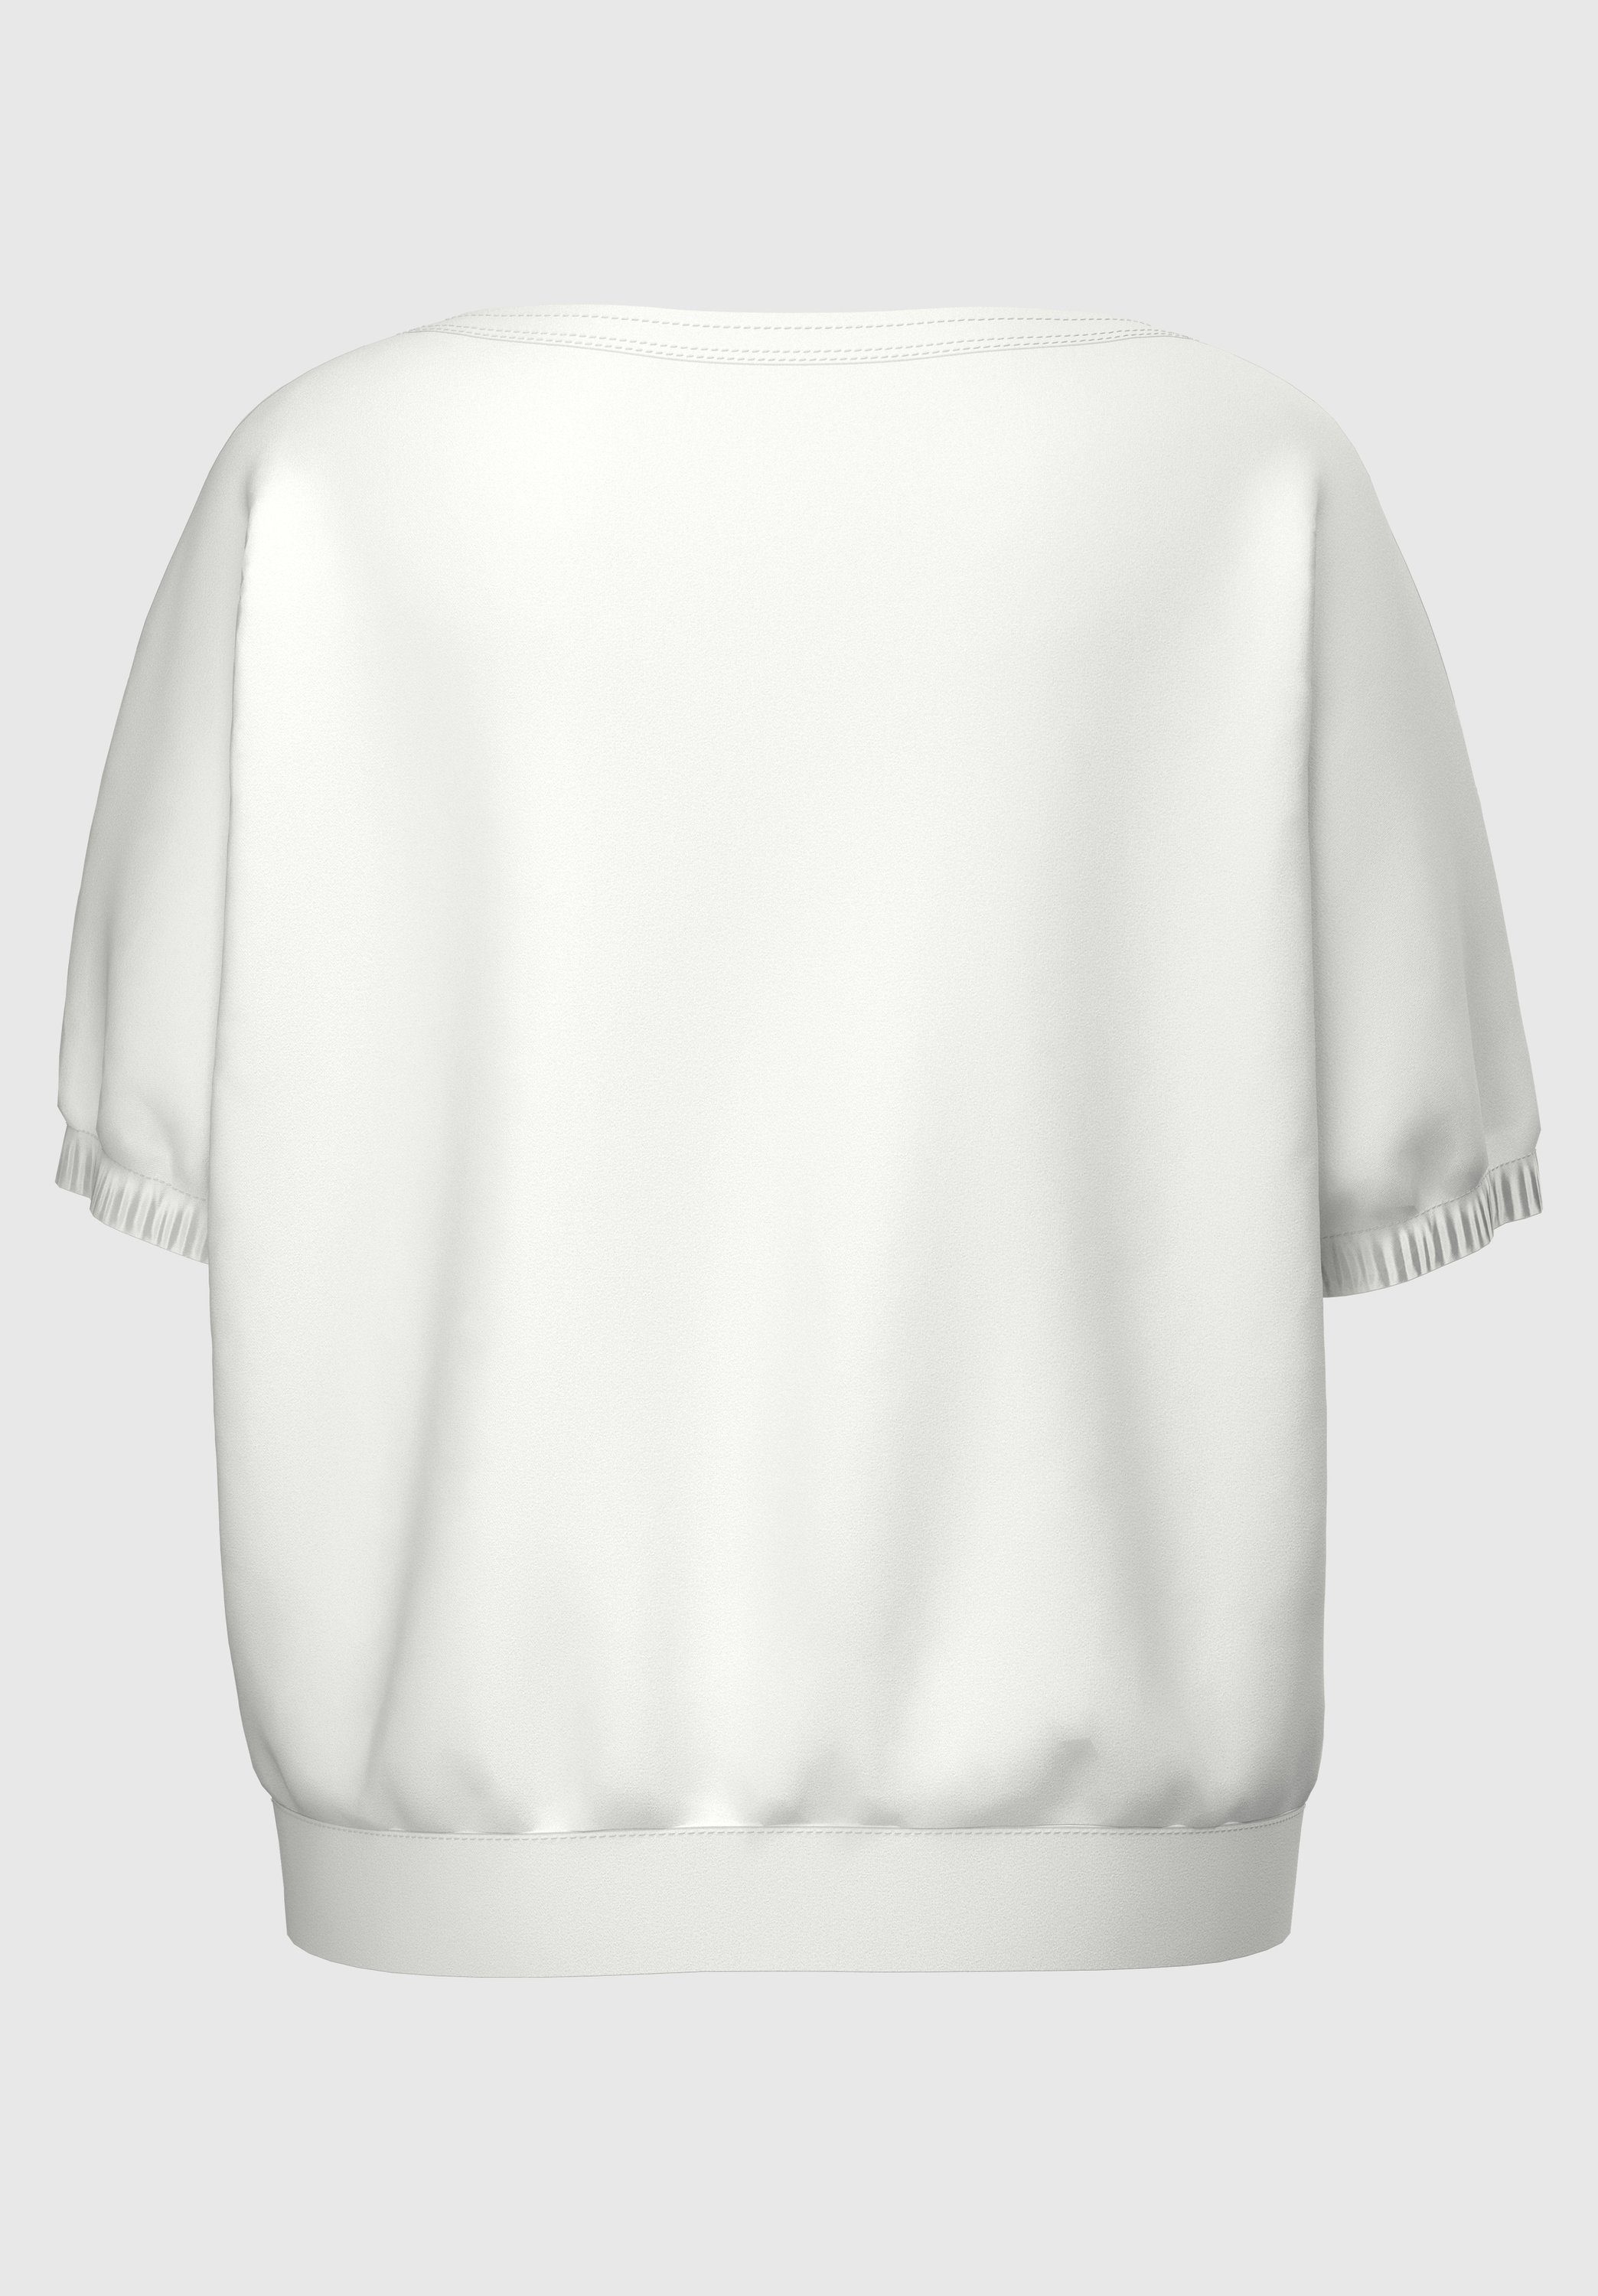 Print-Shirt Wording CHRISTINA farbigem bianca coolem und mit Frontmotiv